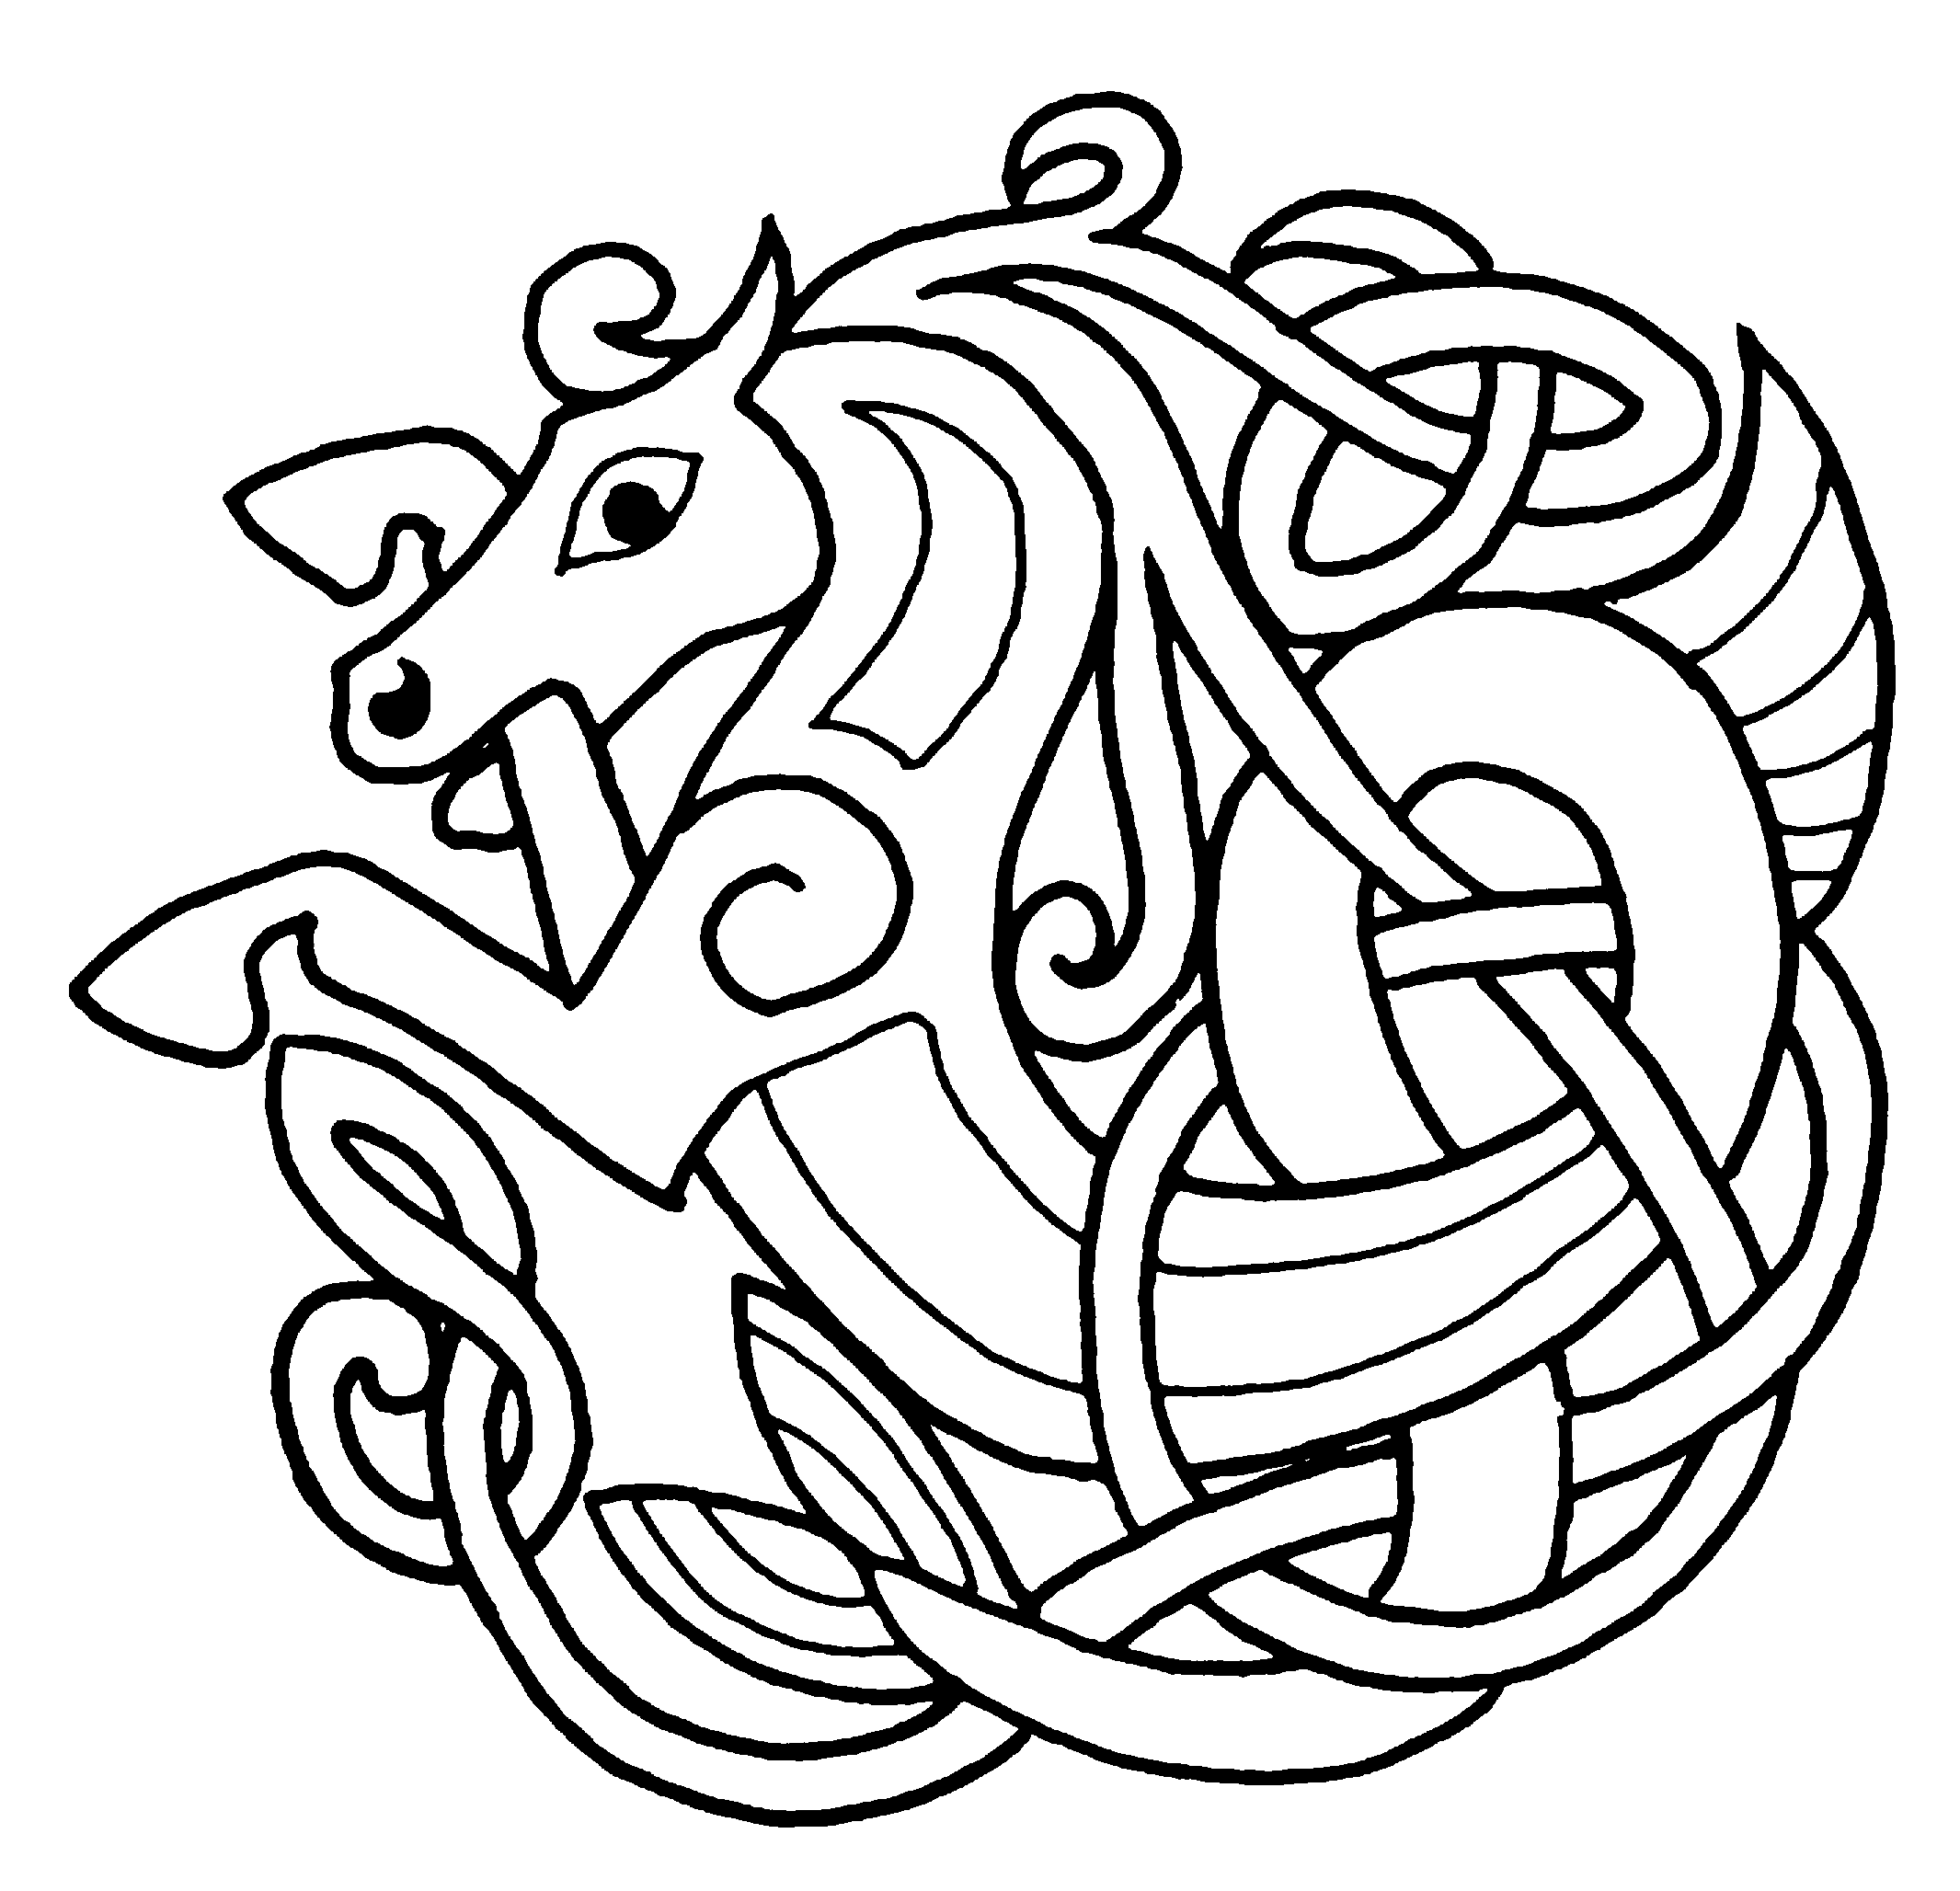 Celtic Knot Patterns Free   Clipart Best